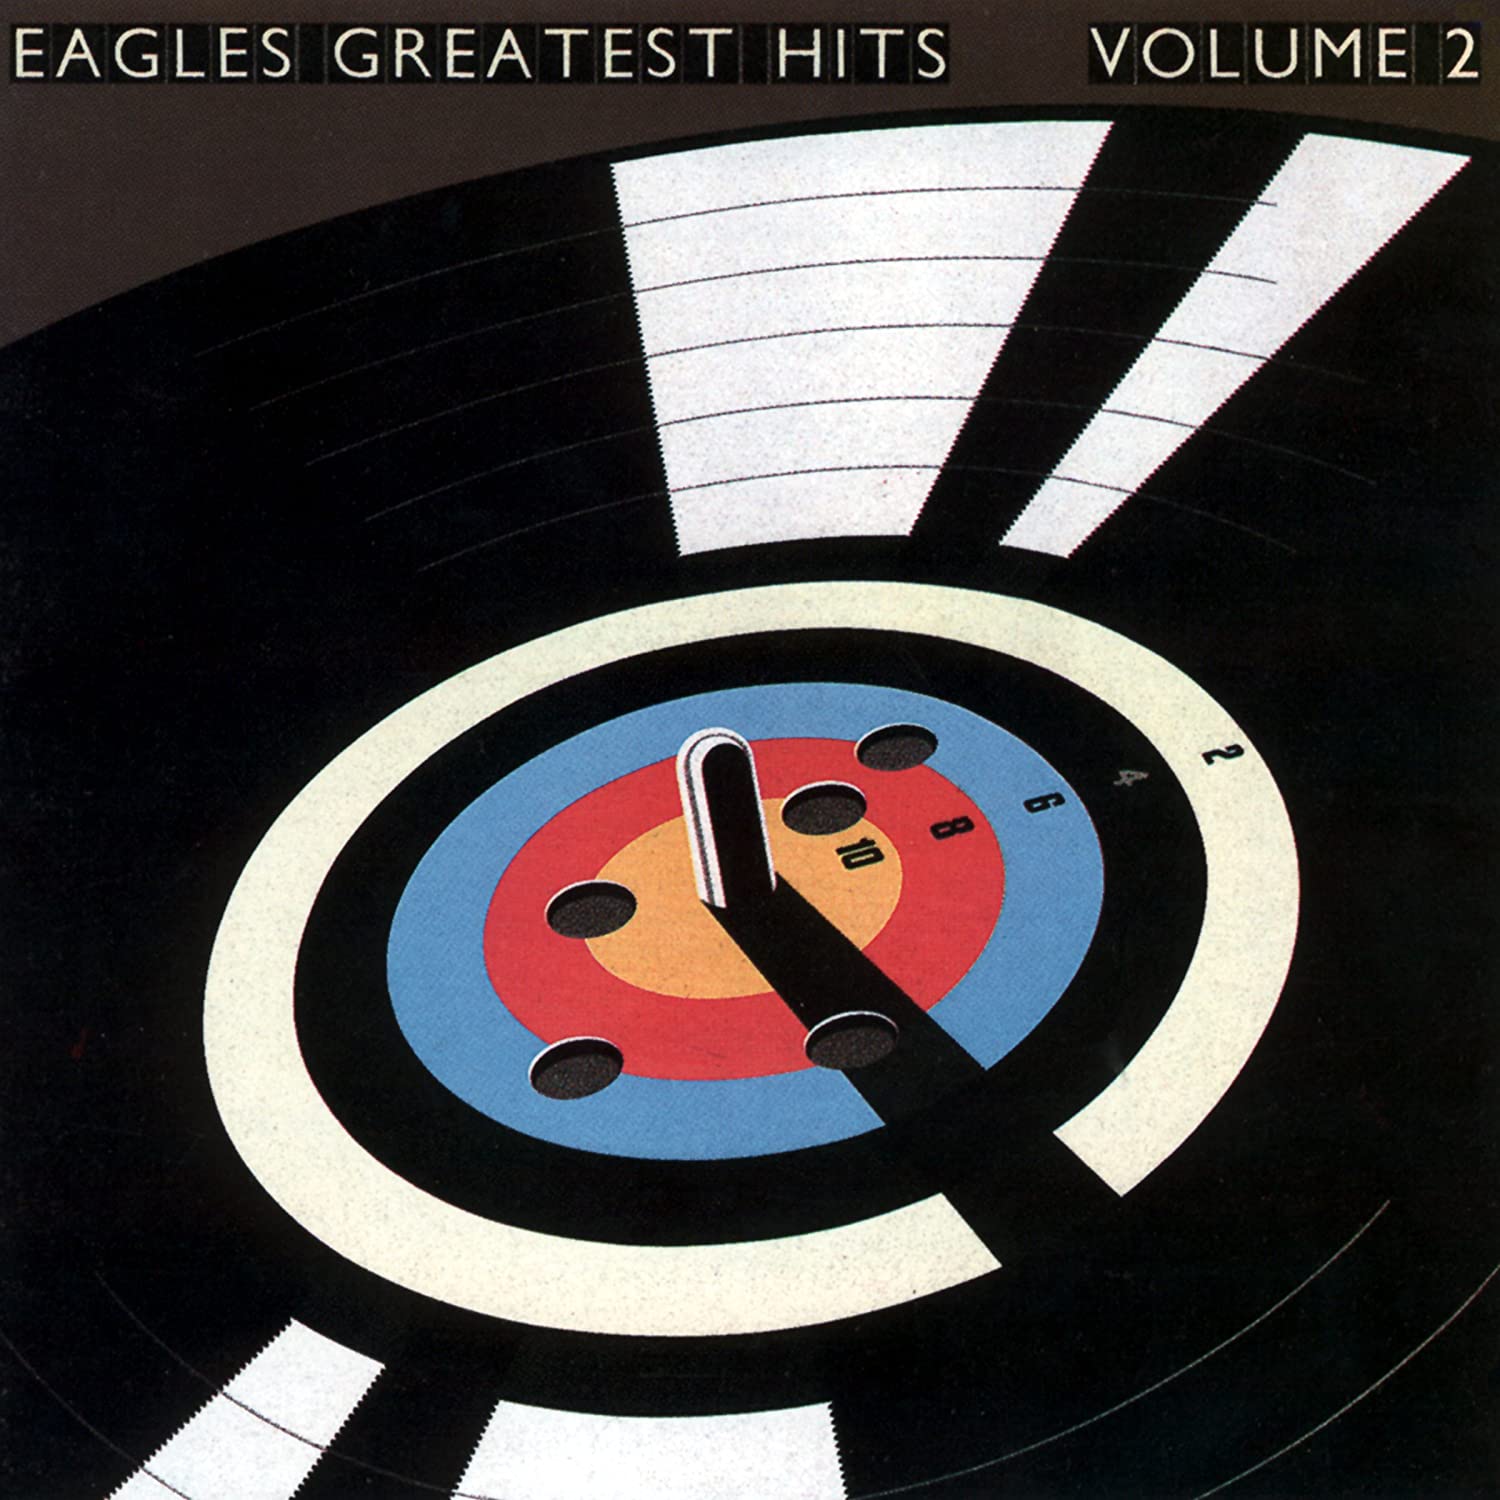 Eagles Greatest Hits Volume 2 CD